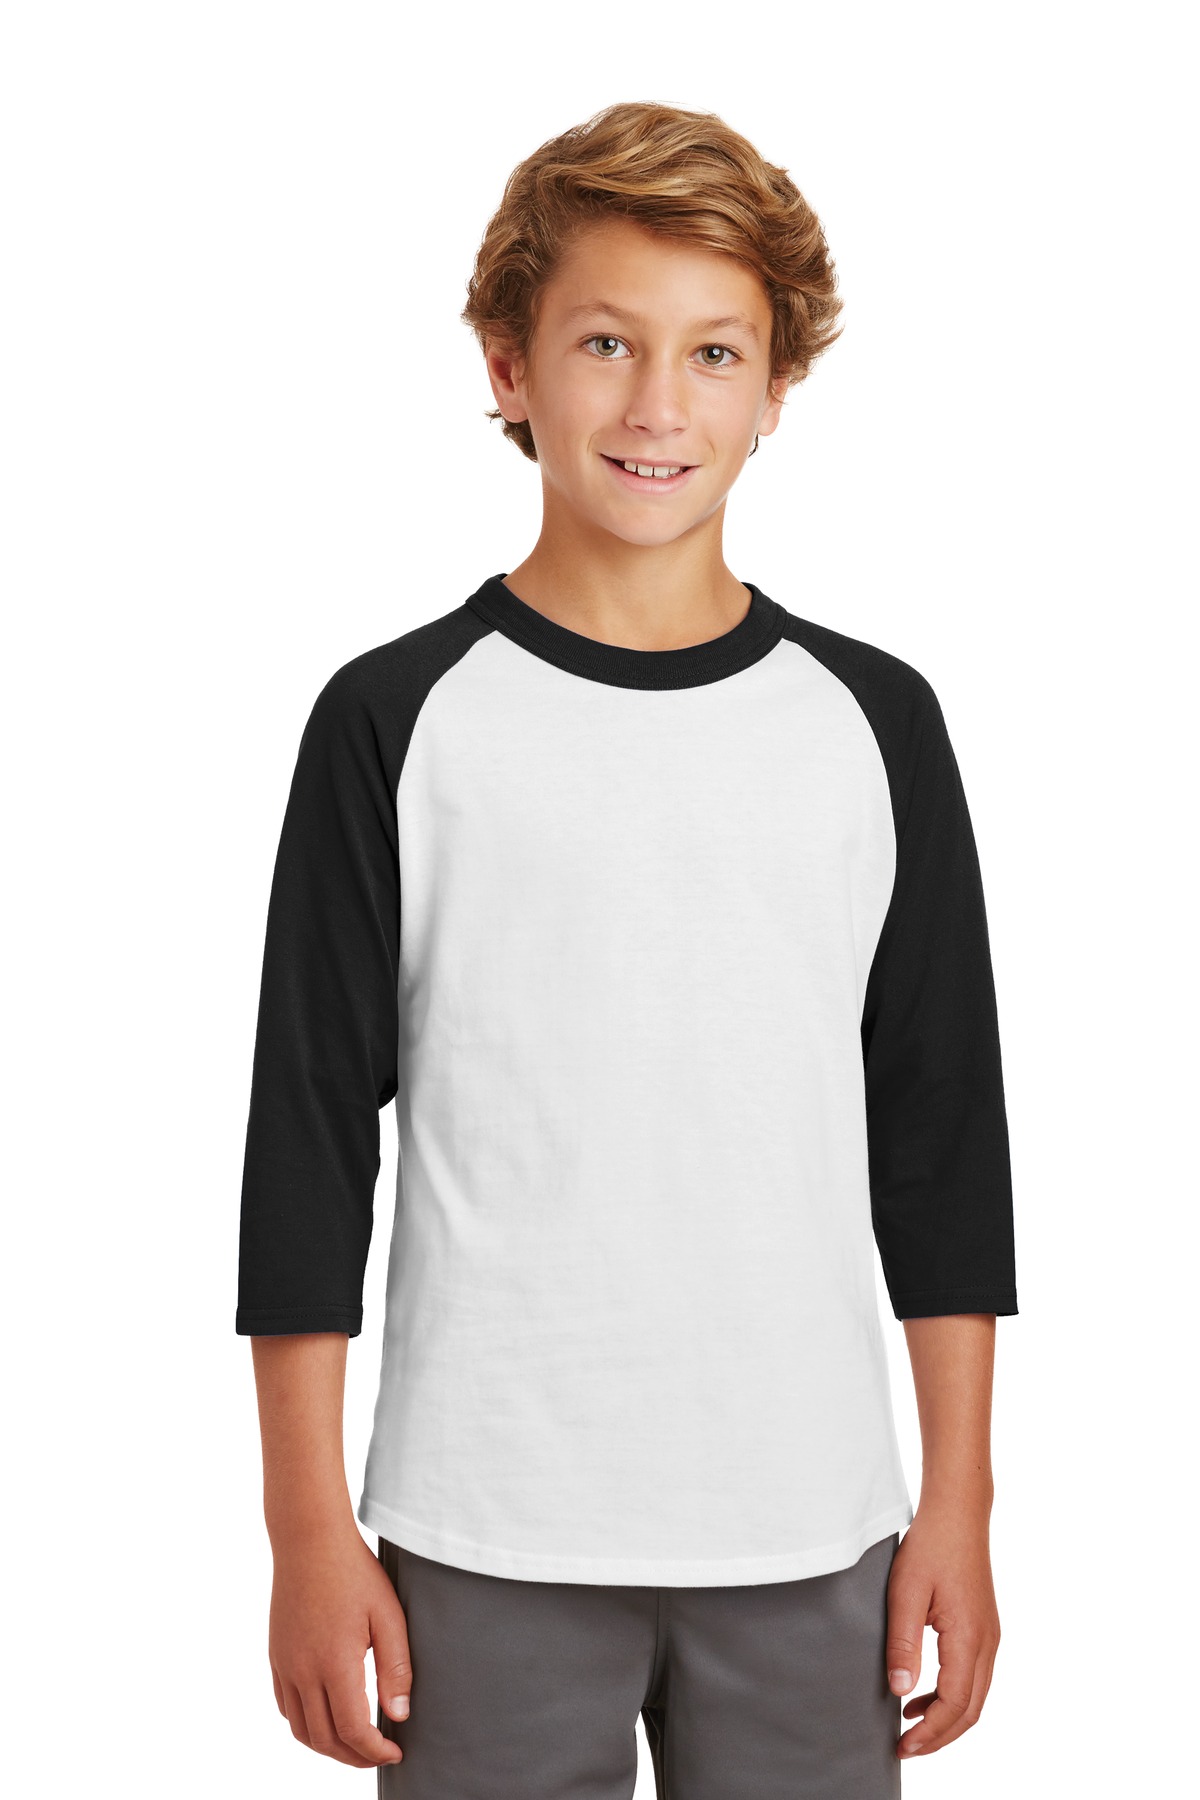 Sport-Tek Activewear Youth T-Shirts for Hospitality ® Youth Colorblock Raglan Jersey.-Sport-Tek